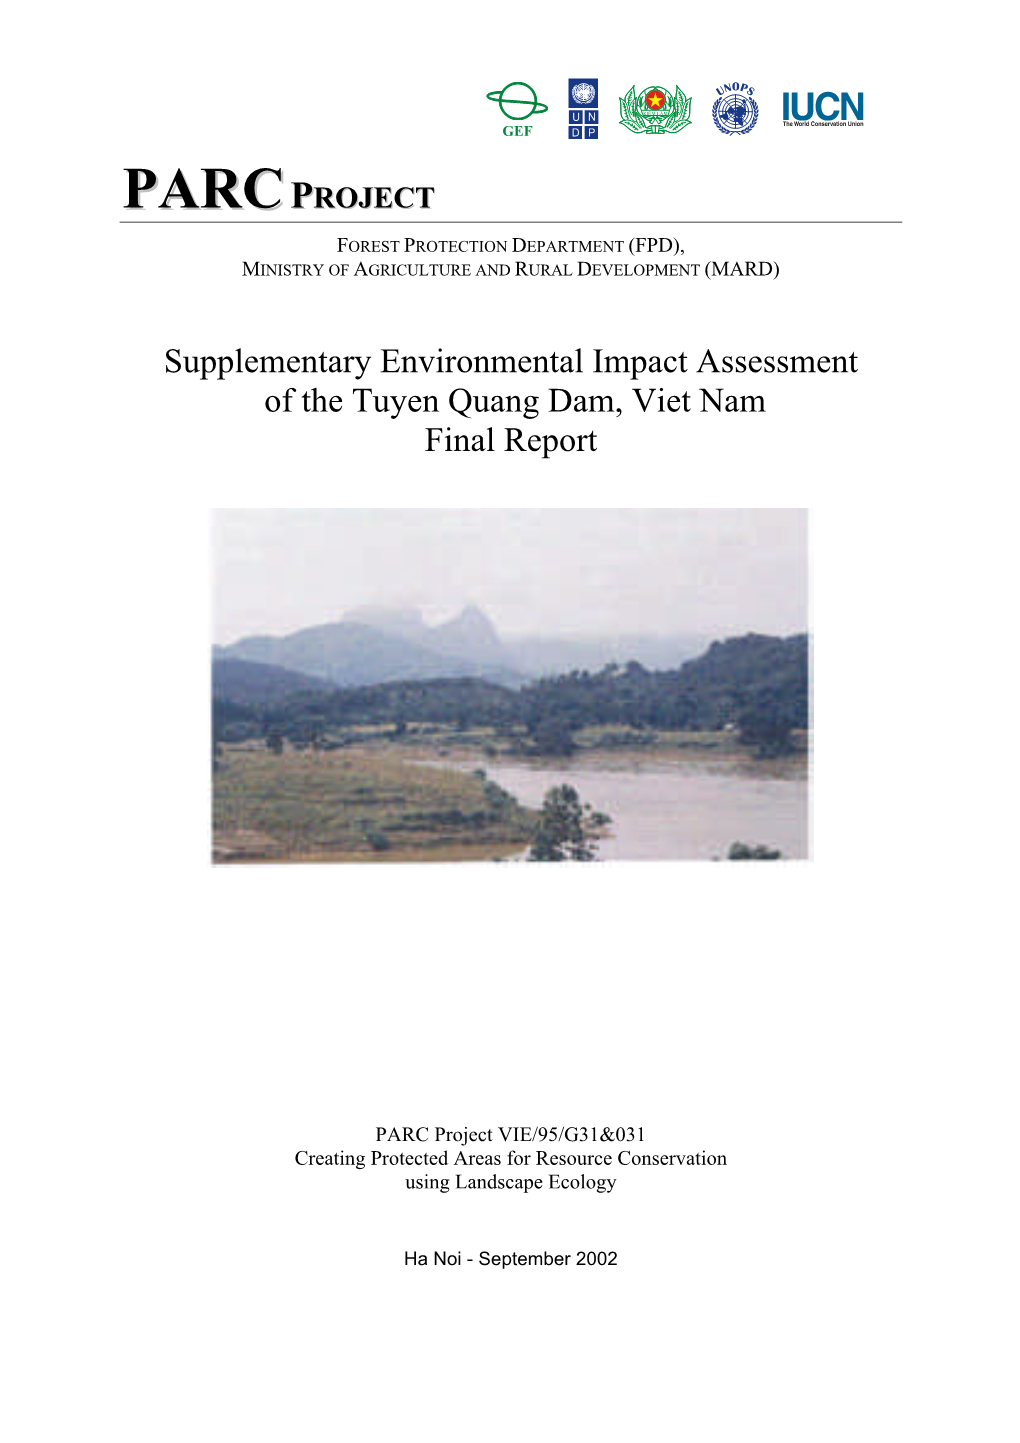 Supplementary Environmental Impact Assessment of the Tuyen Quang Dam, Viet Nam Final Report